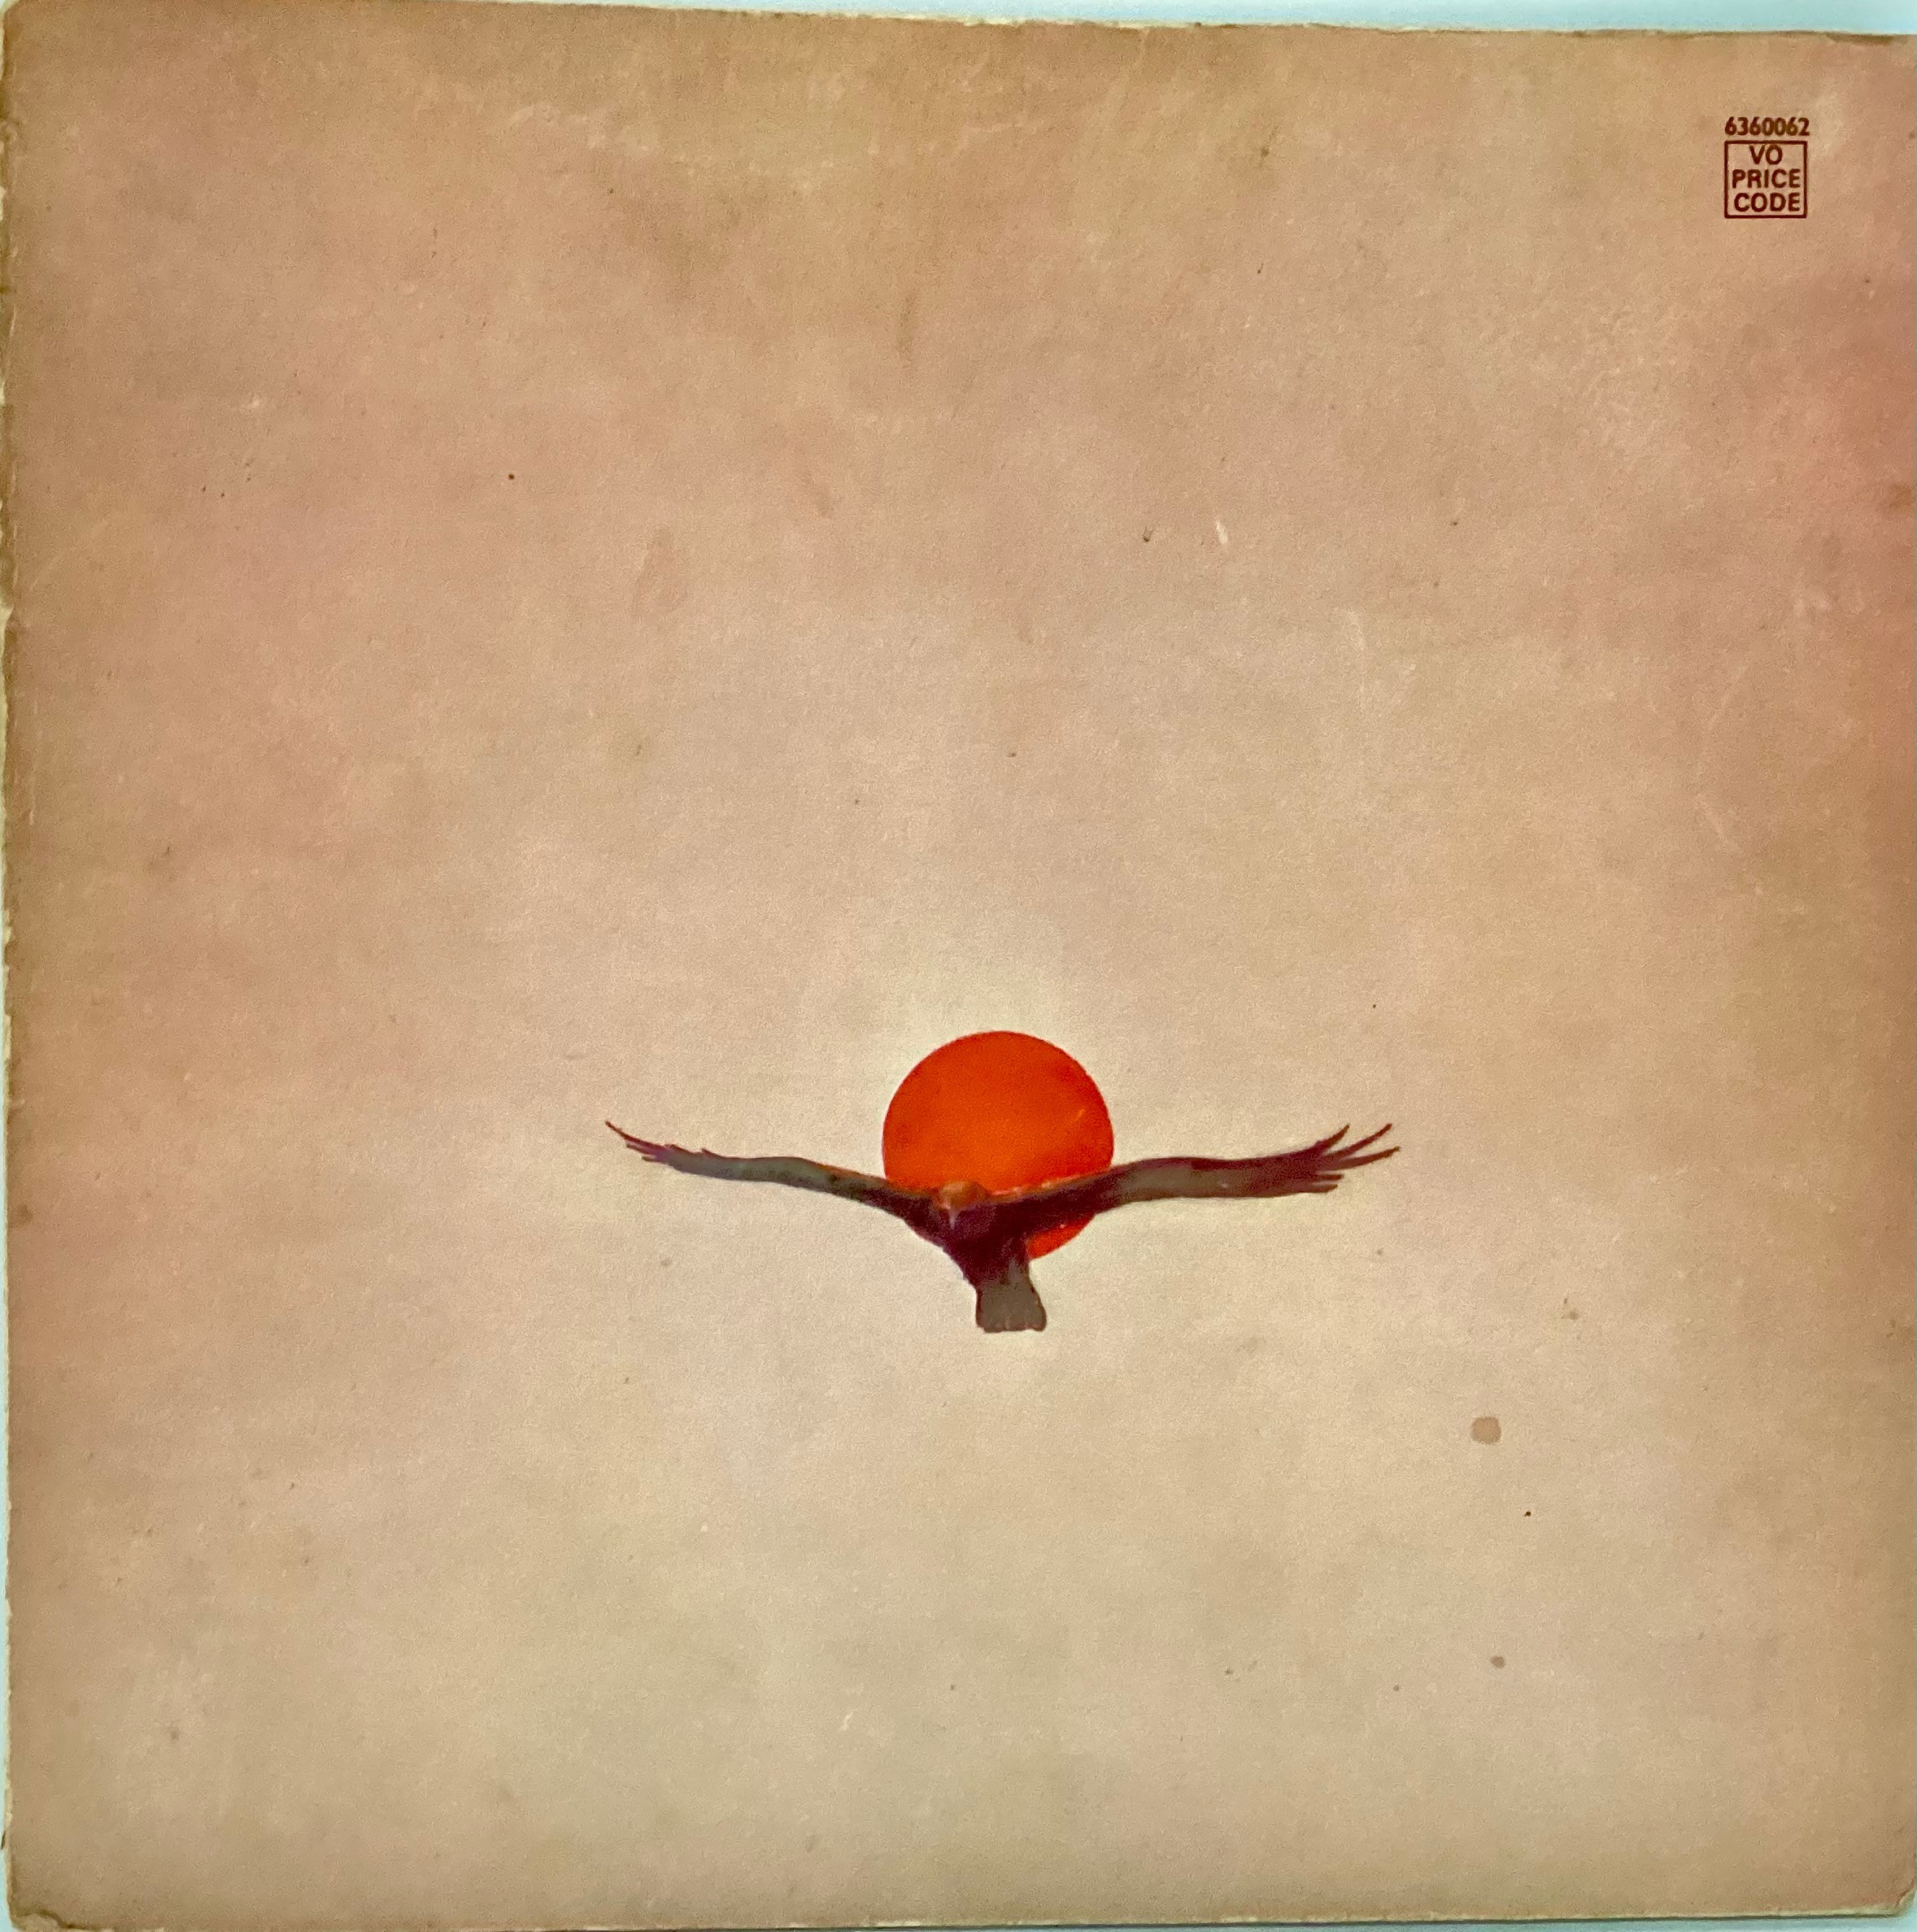 JADE WARRIOR VINYL VERTIGO SWIRL ALBUM ‘RELEASED’. This Ex condition album is from 1971 and on the - Bild 4 aus 9